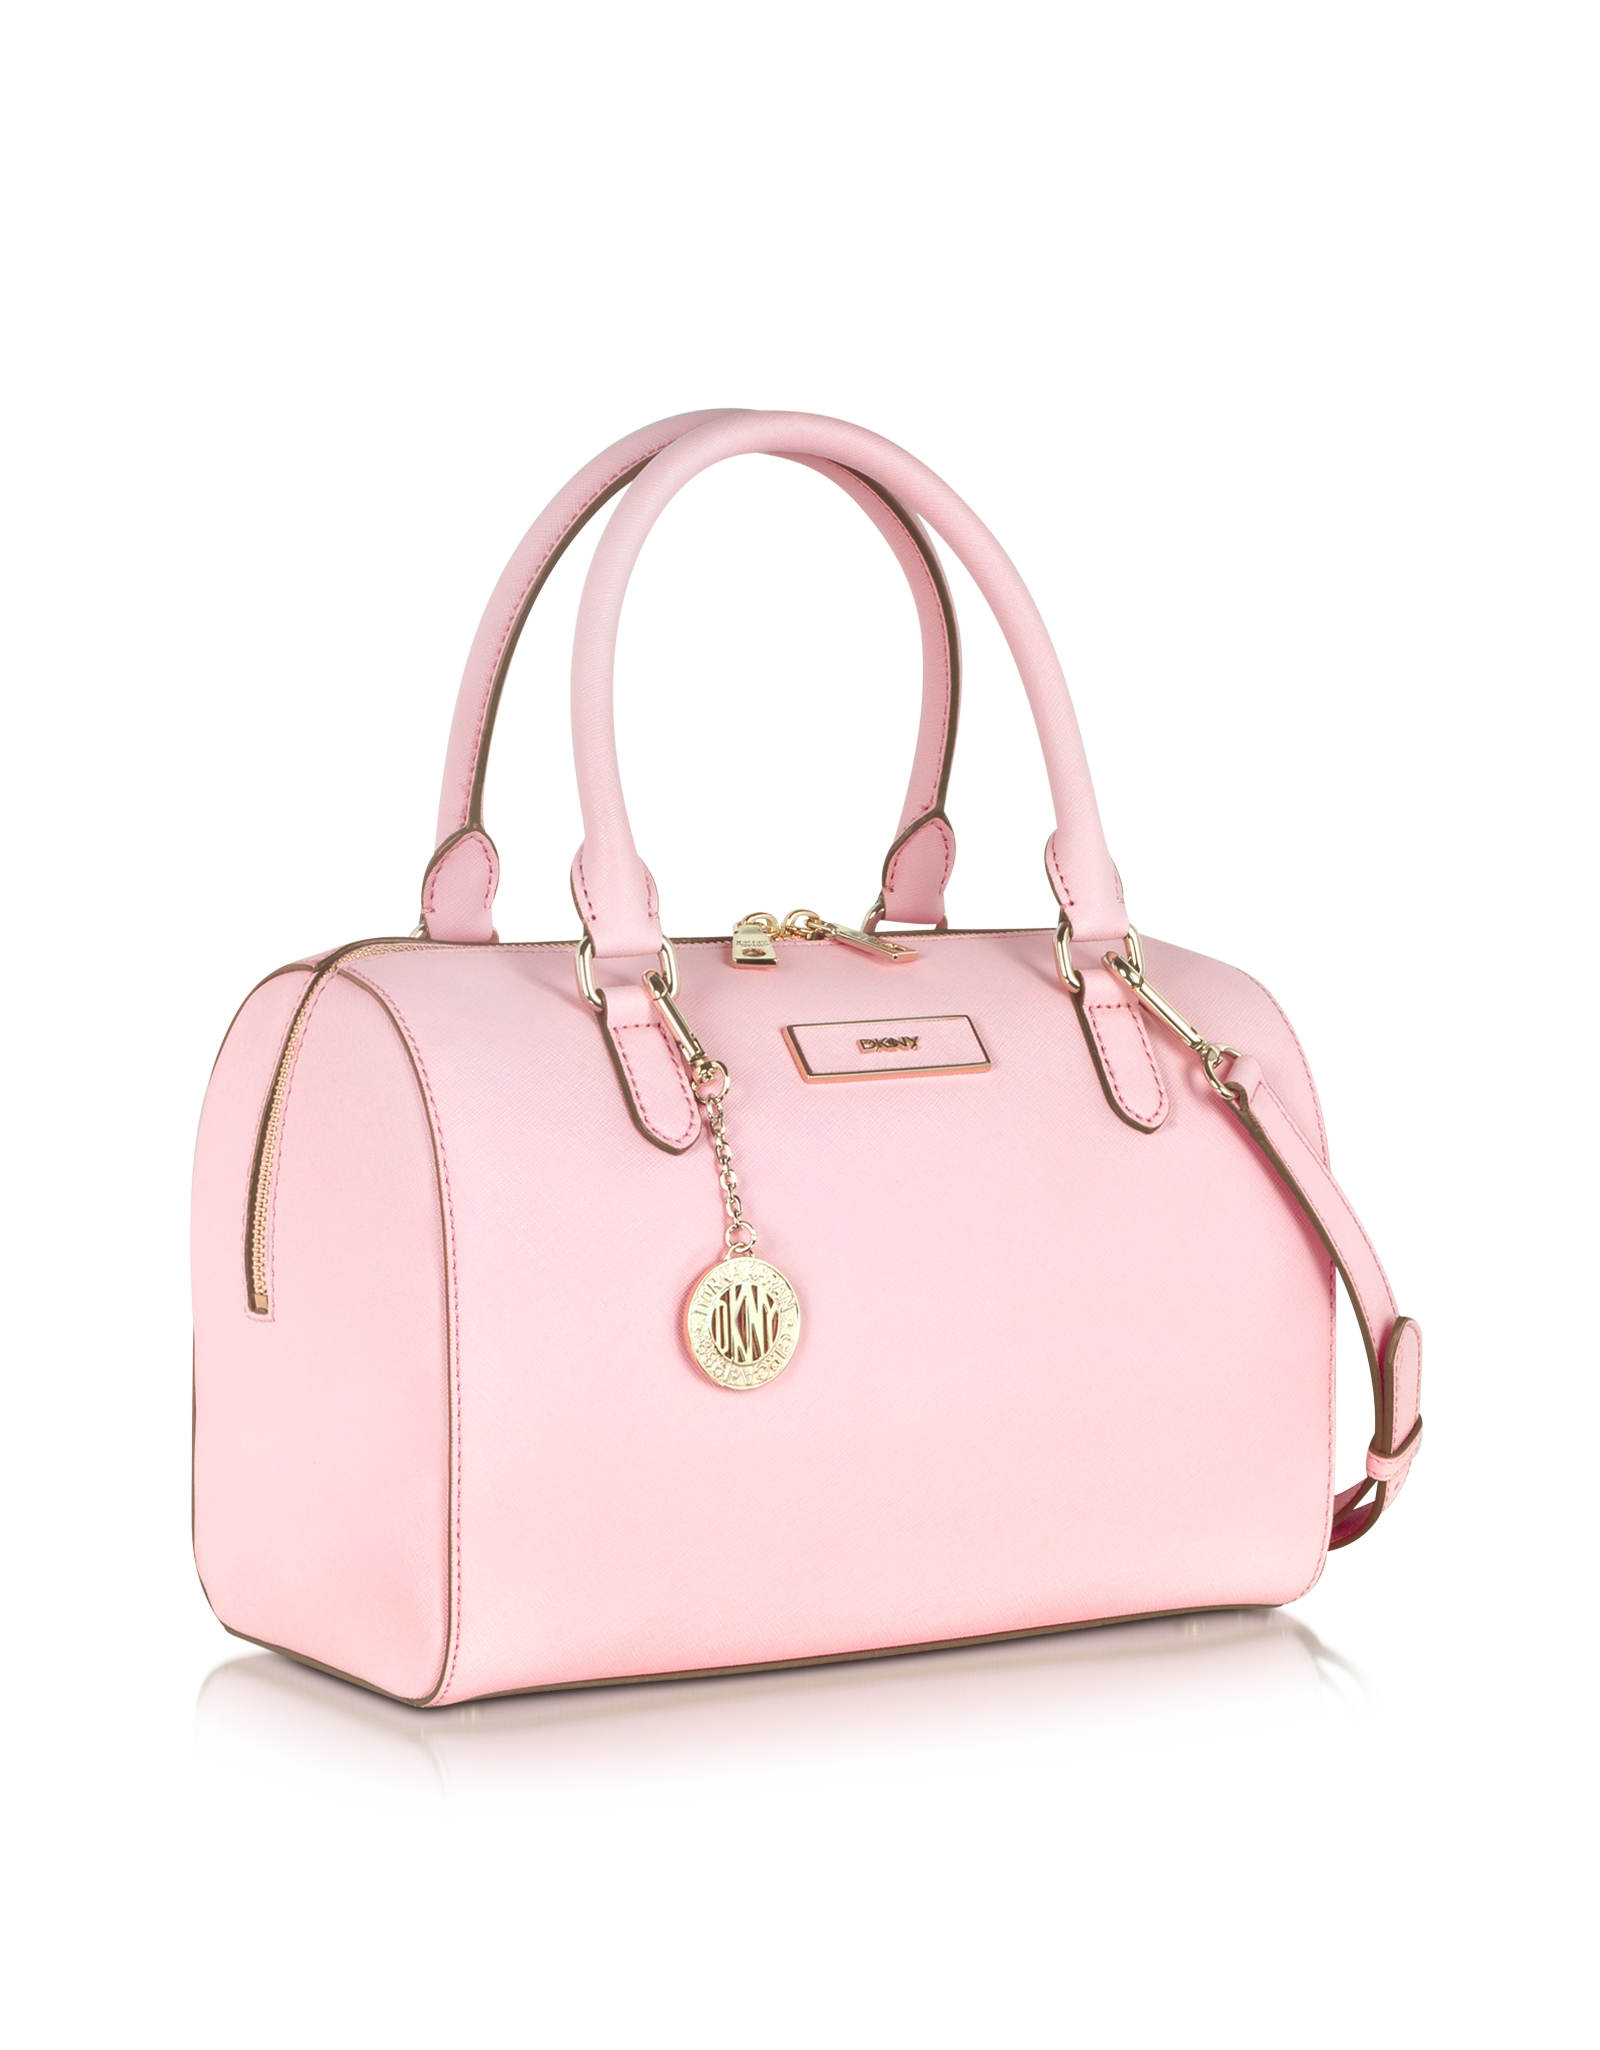 Dkny Pink Purse Leather Handbag Small | SEMA Data Co-op